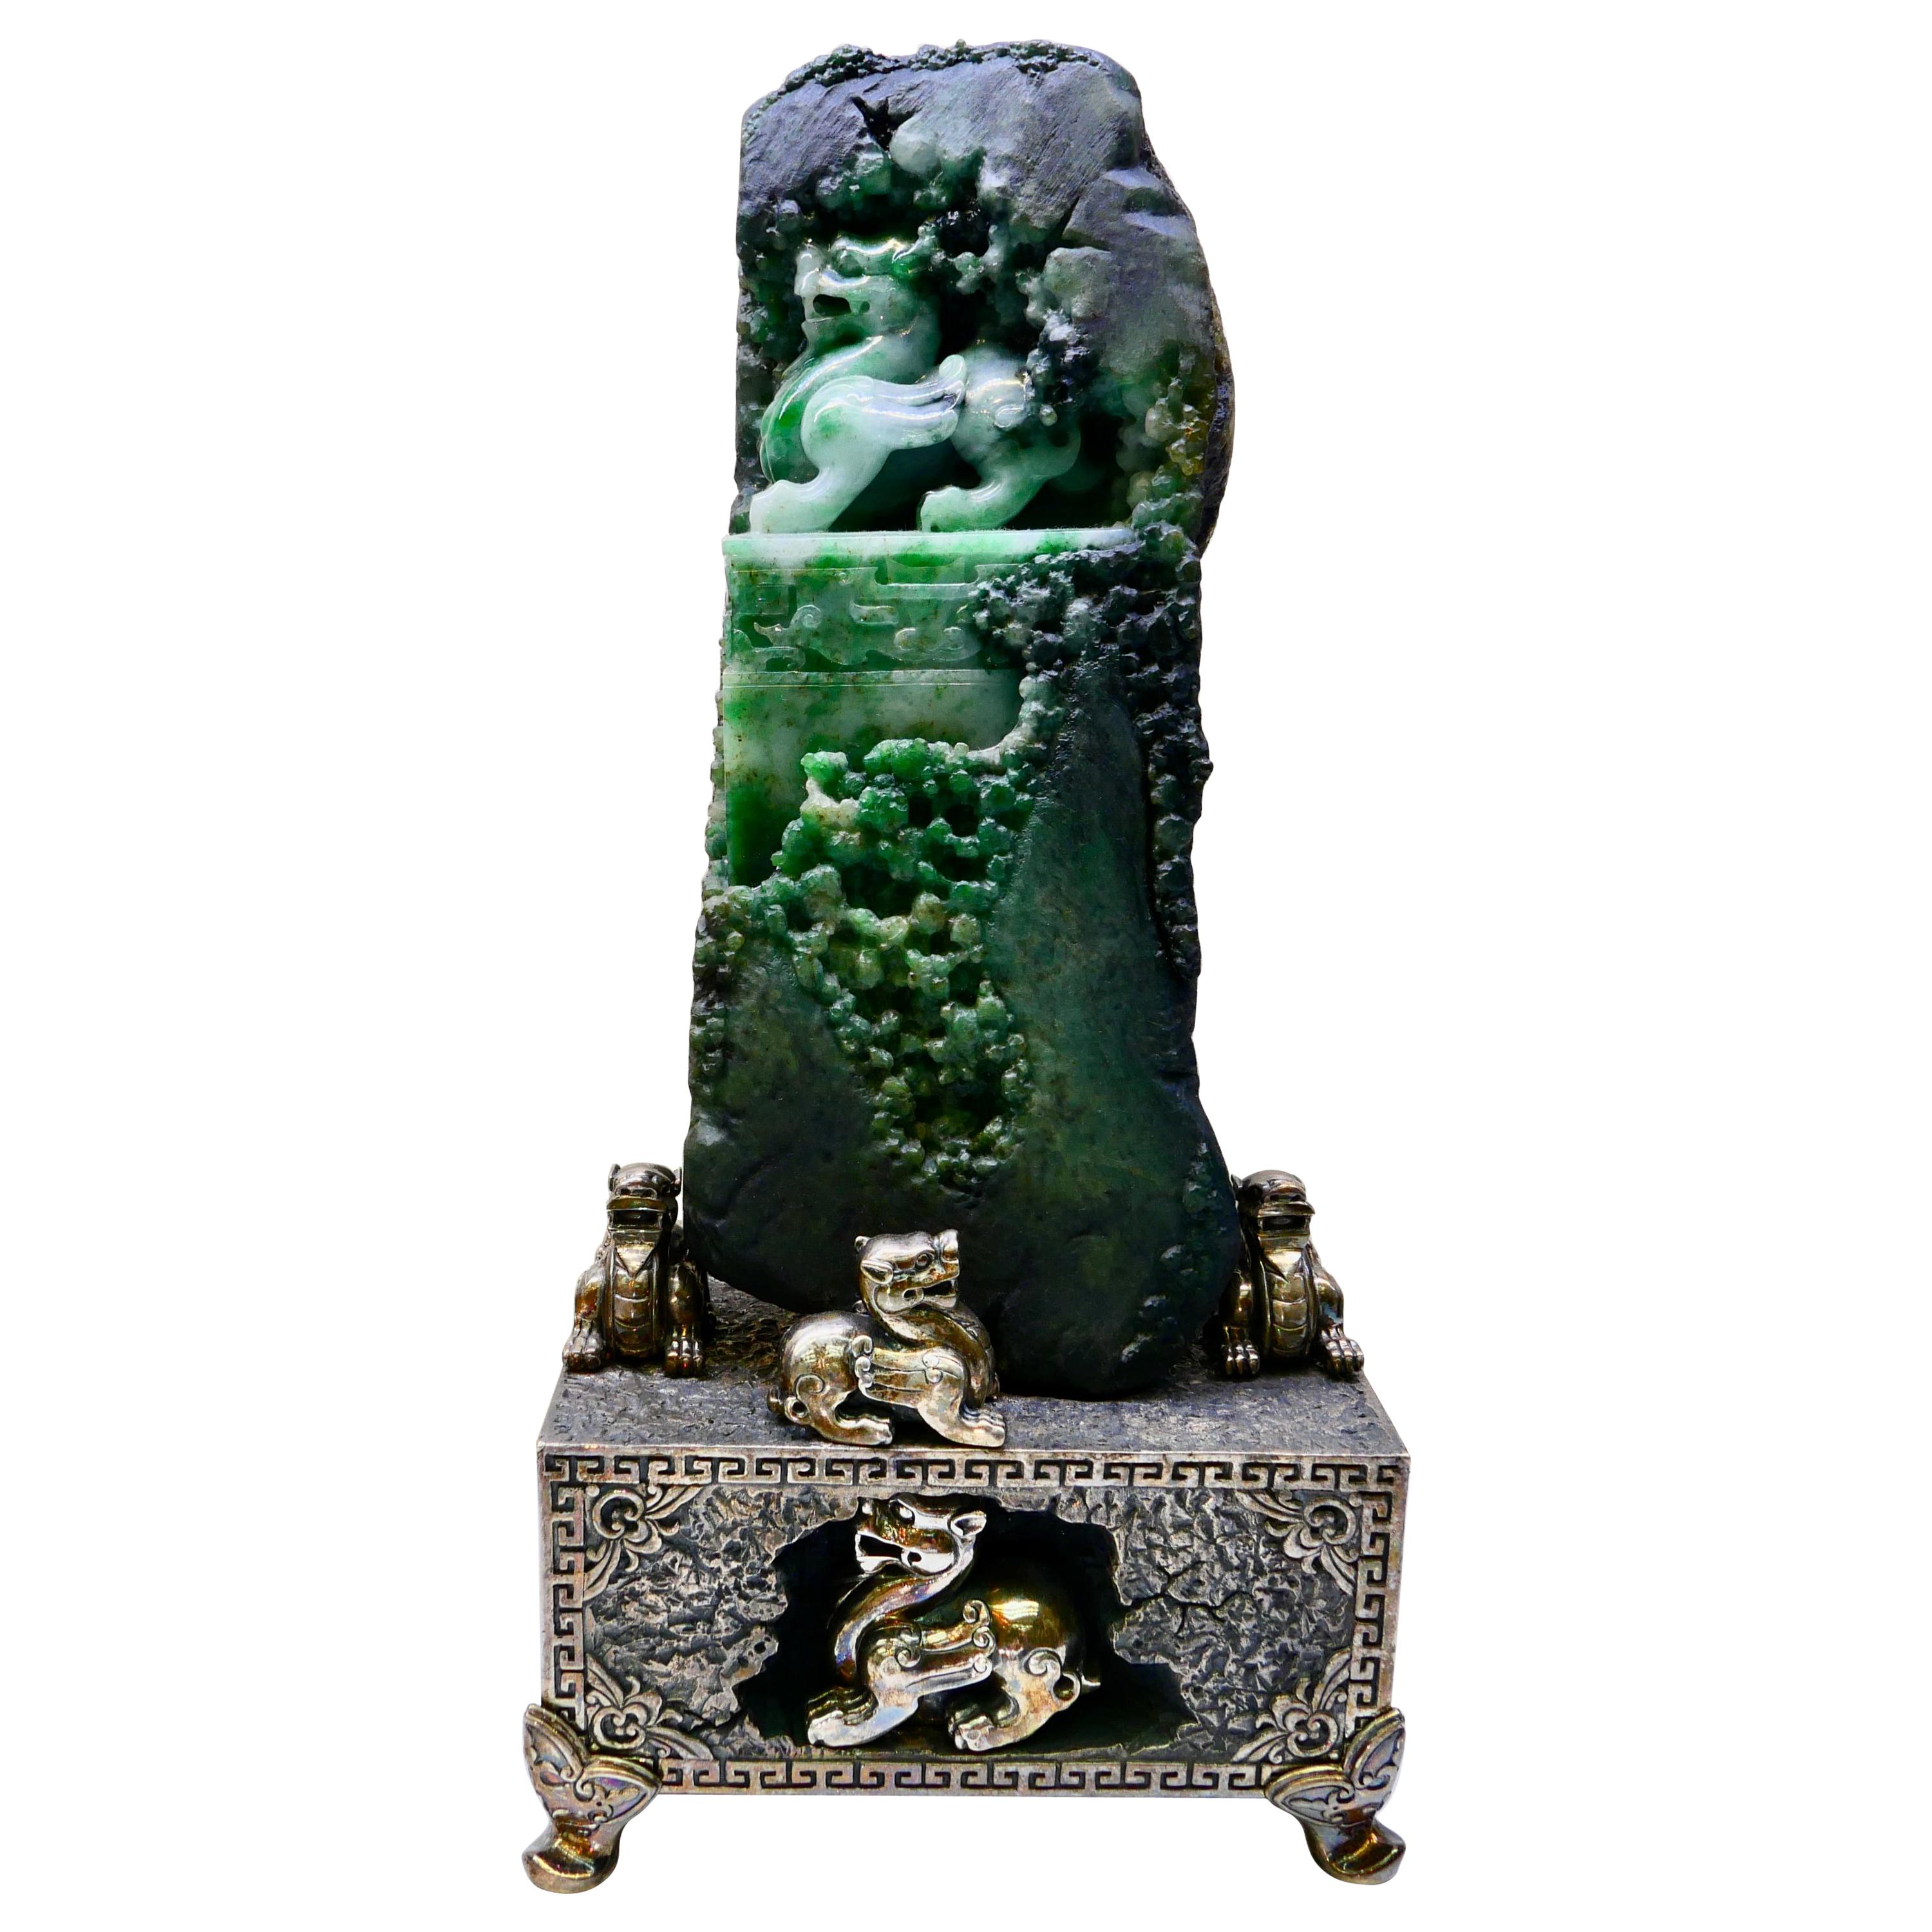 Certified Natural Jadeite Jade Decoration, "Lion Rock" Qing Dynasty, 1644-1911